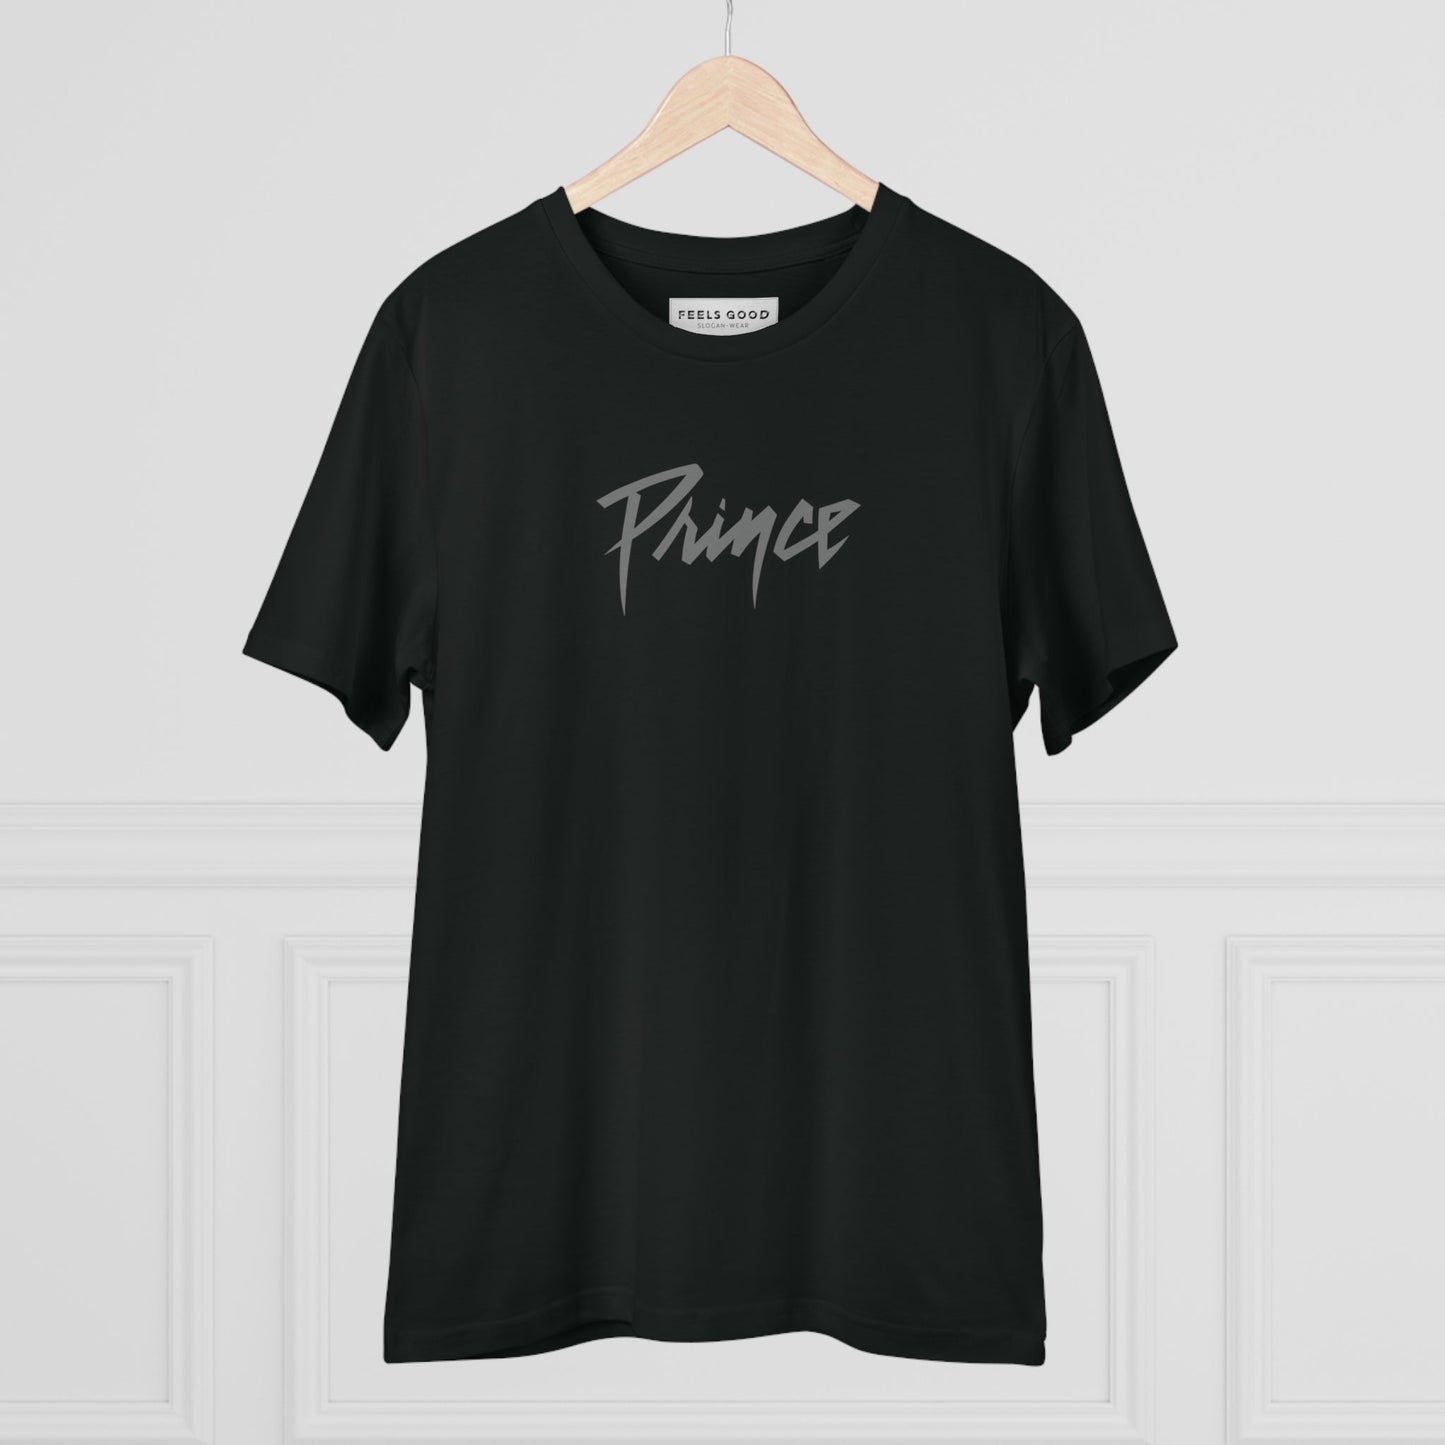 Urban 'Prince' Funk Organic Cotton T-shirt - Prince